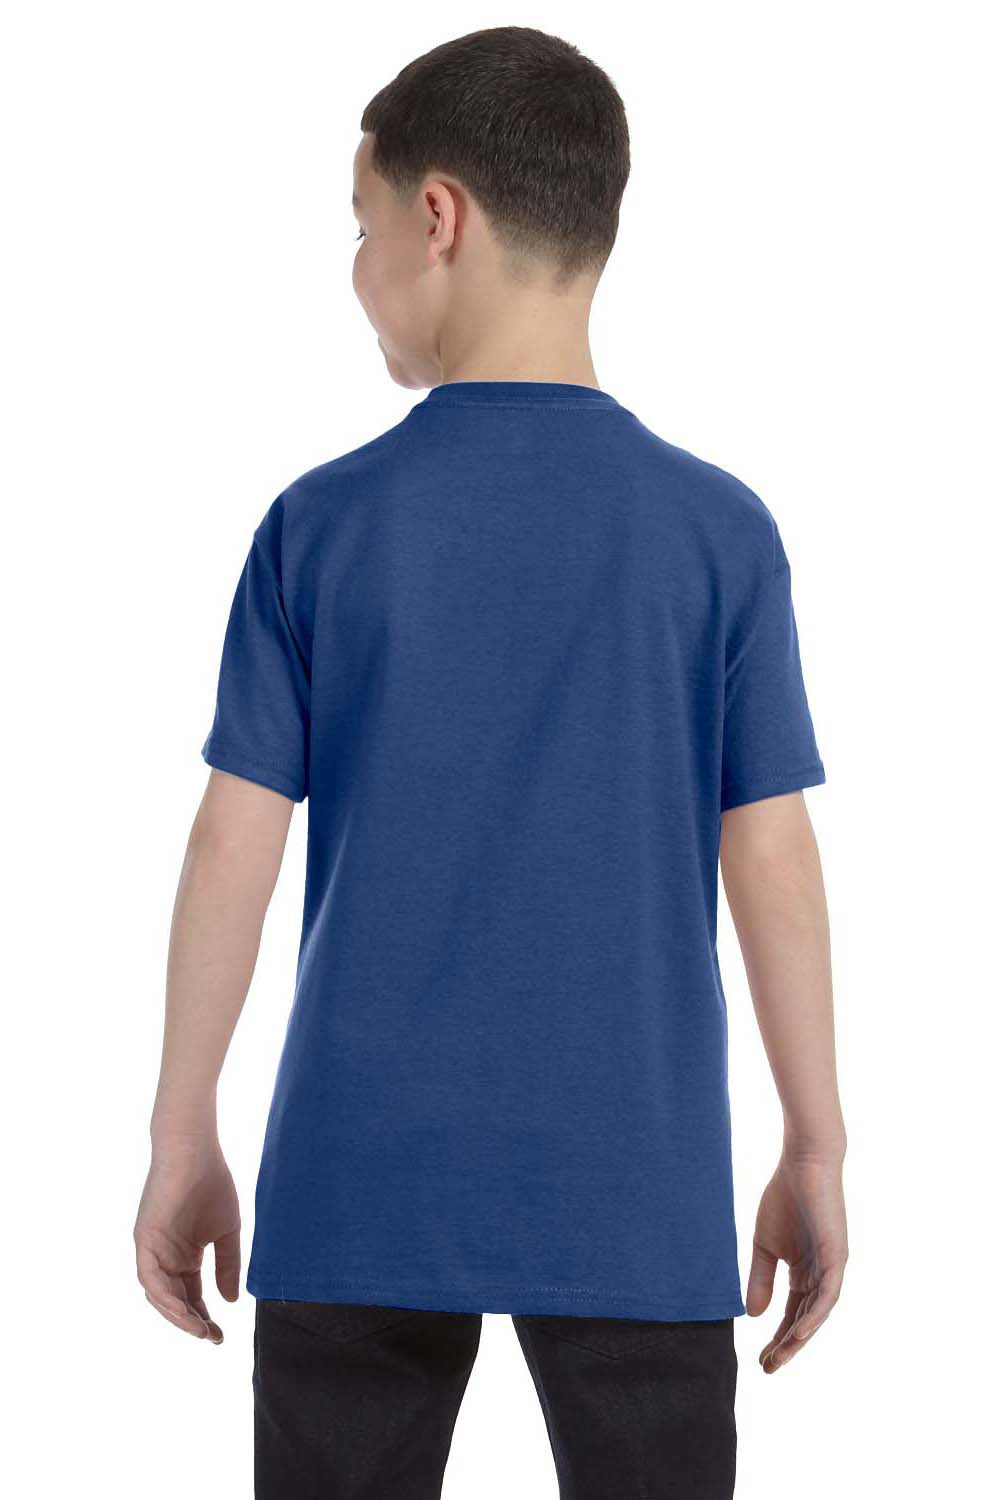 Jerzees 29B Youth Dri-Power Moisture Wicking Short Sleeve Crewneck T-Shirt Heather Blue Back